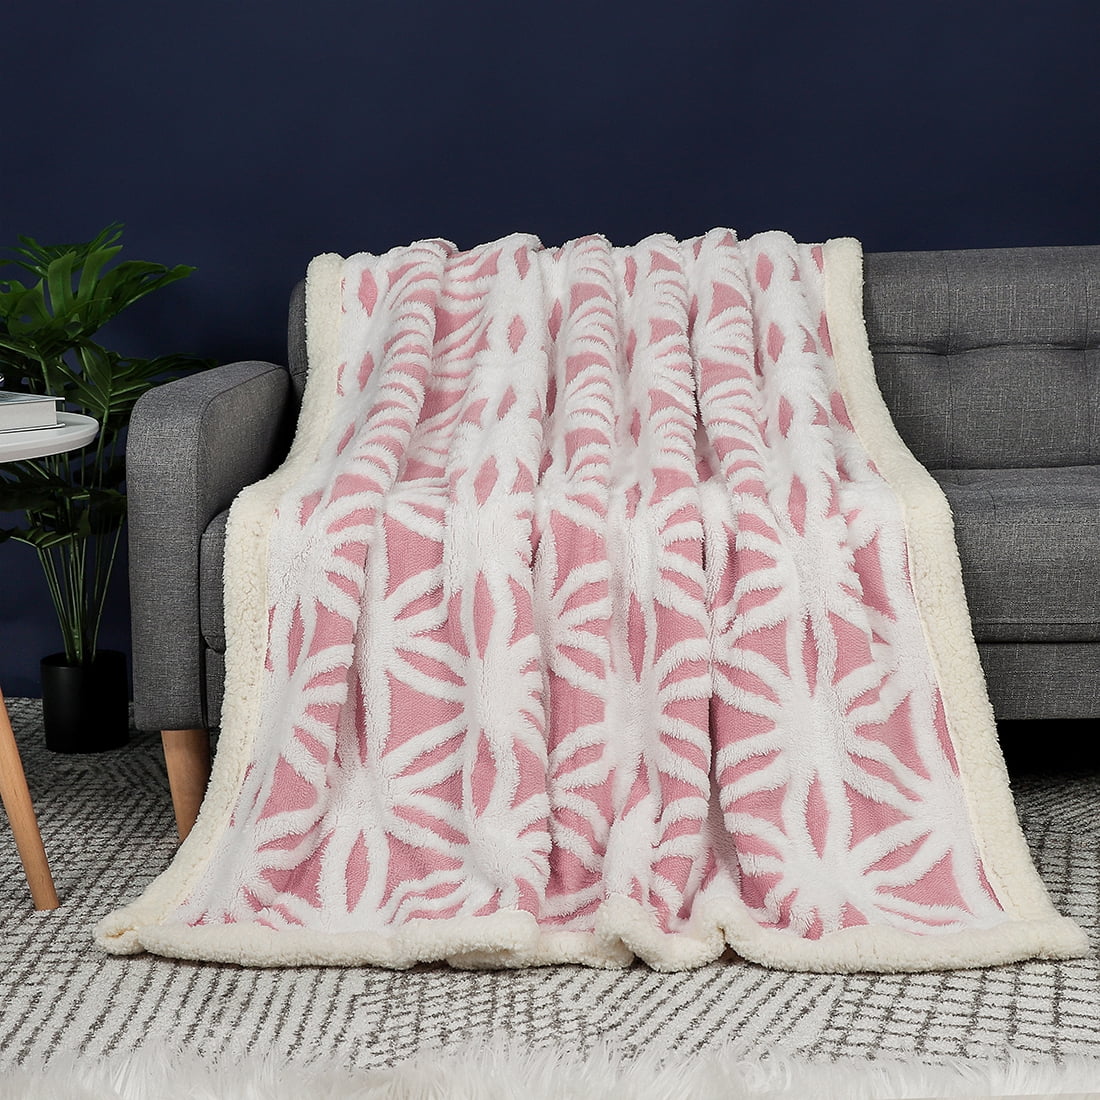 3D Vintage Flower Batik Style Throw Blanket for Kids Baby Soft Fleece Blanket for Adults Men,Twin 60x80